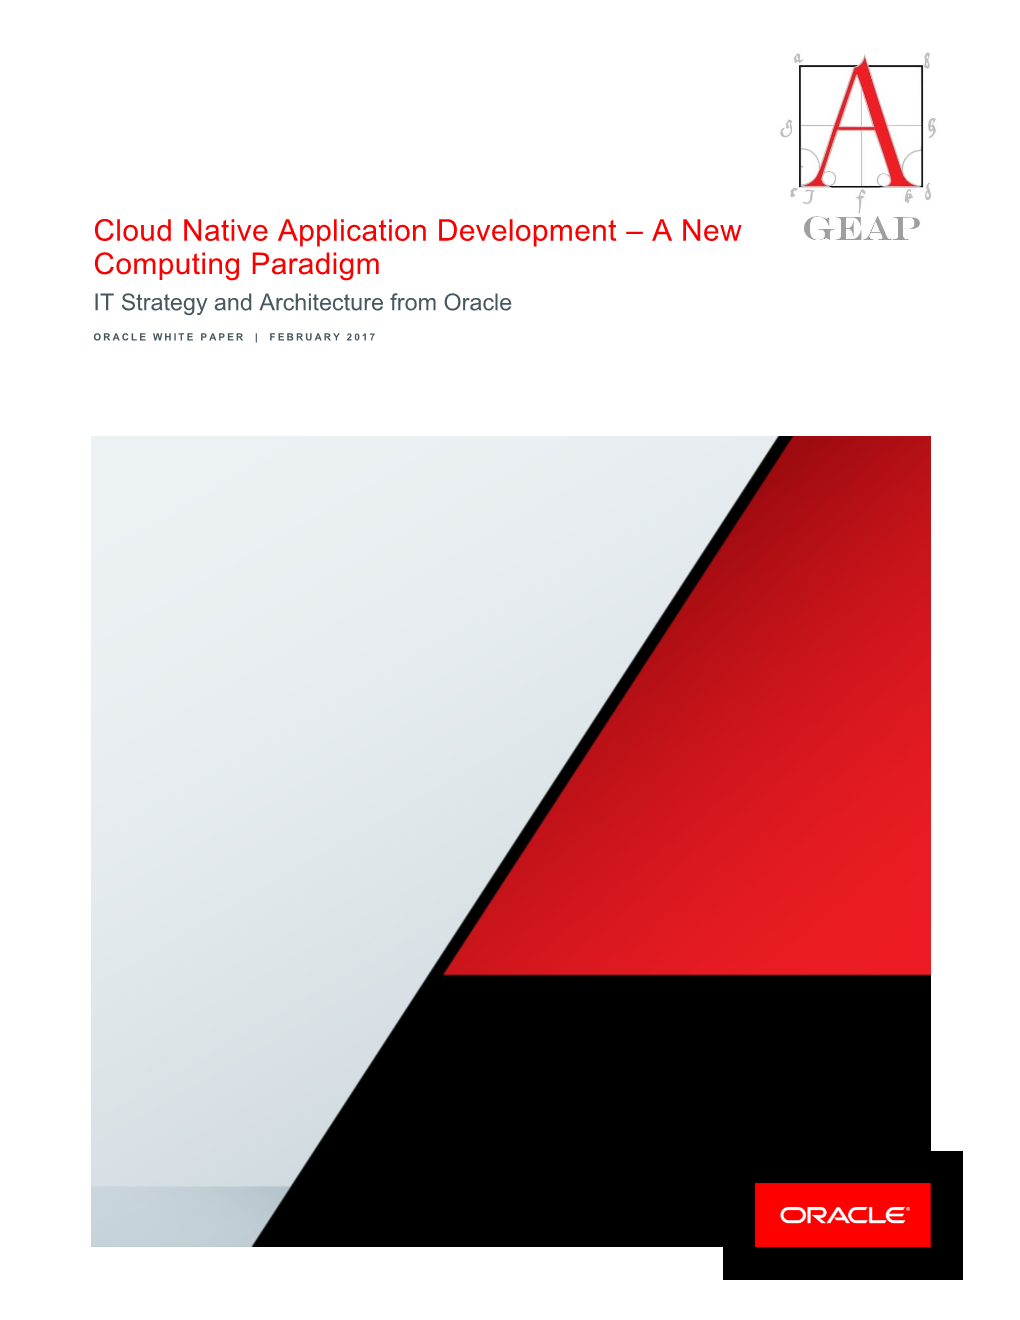 Cloud Native – New Computing Paradigm